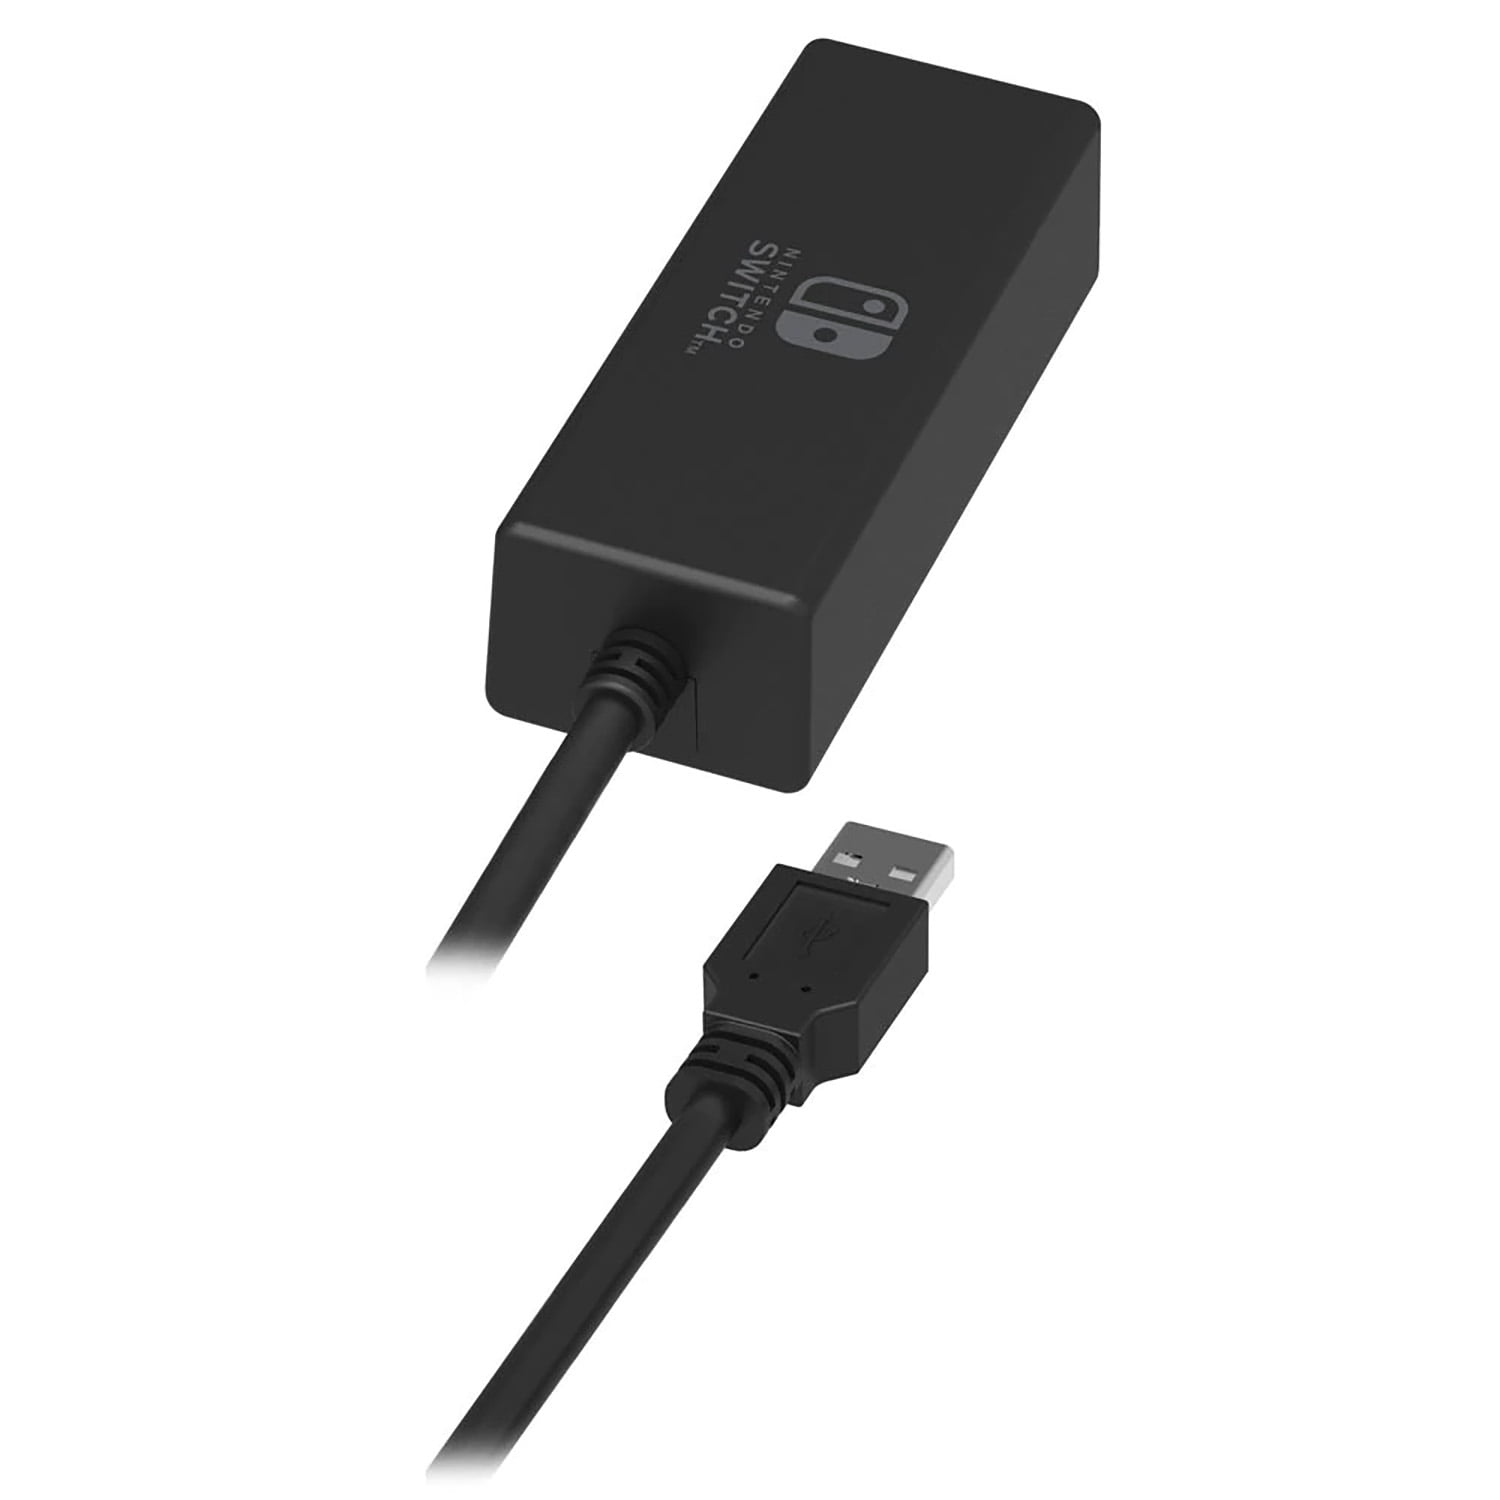 Hori Wired Internet LAN Adapter Converter for Nintendo Switch - Black 